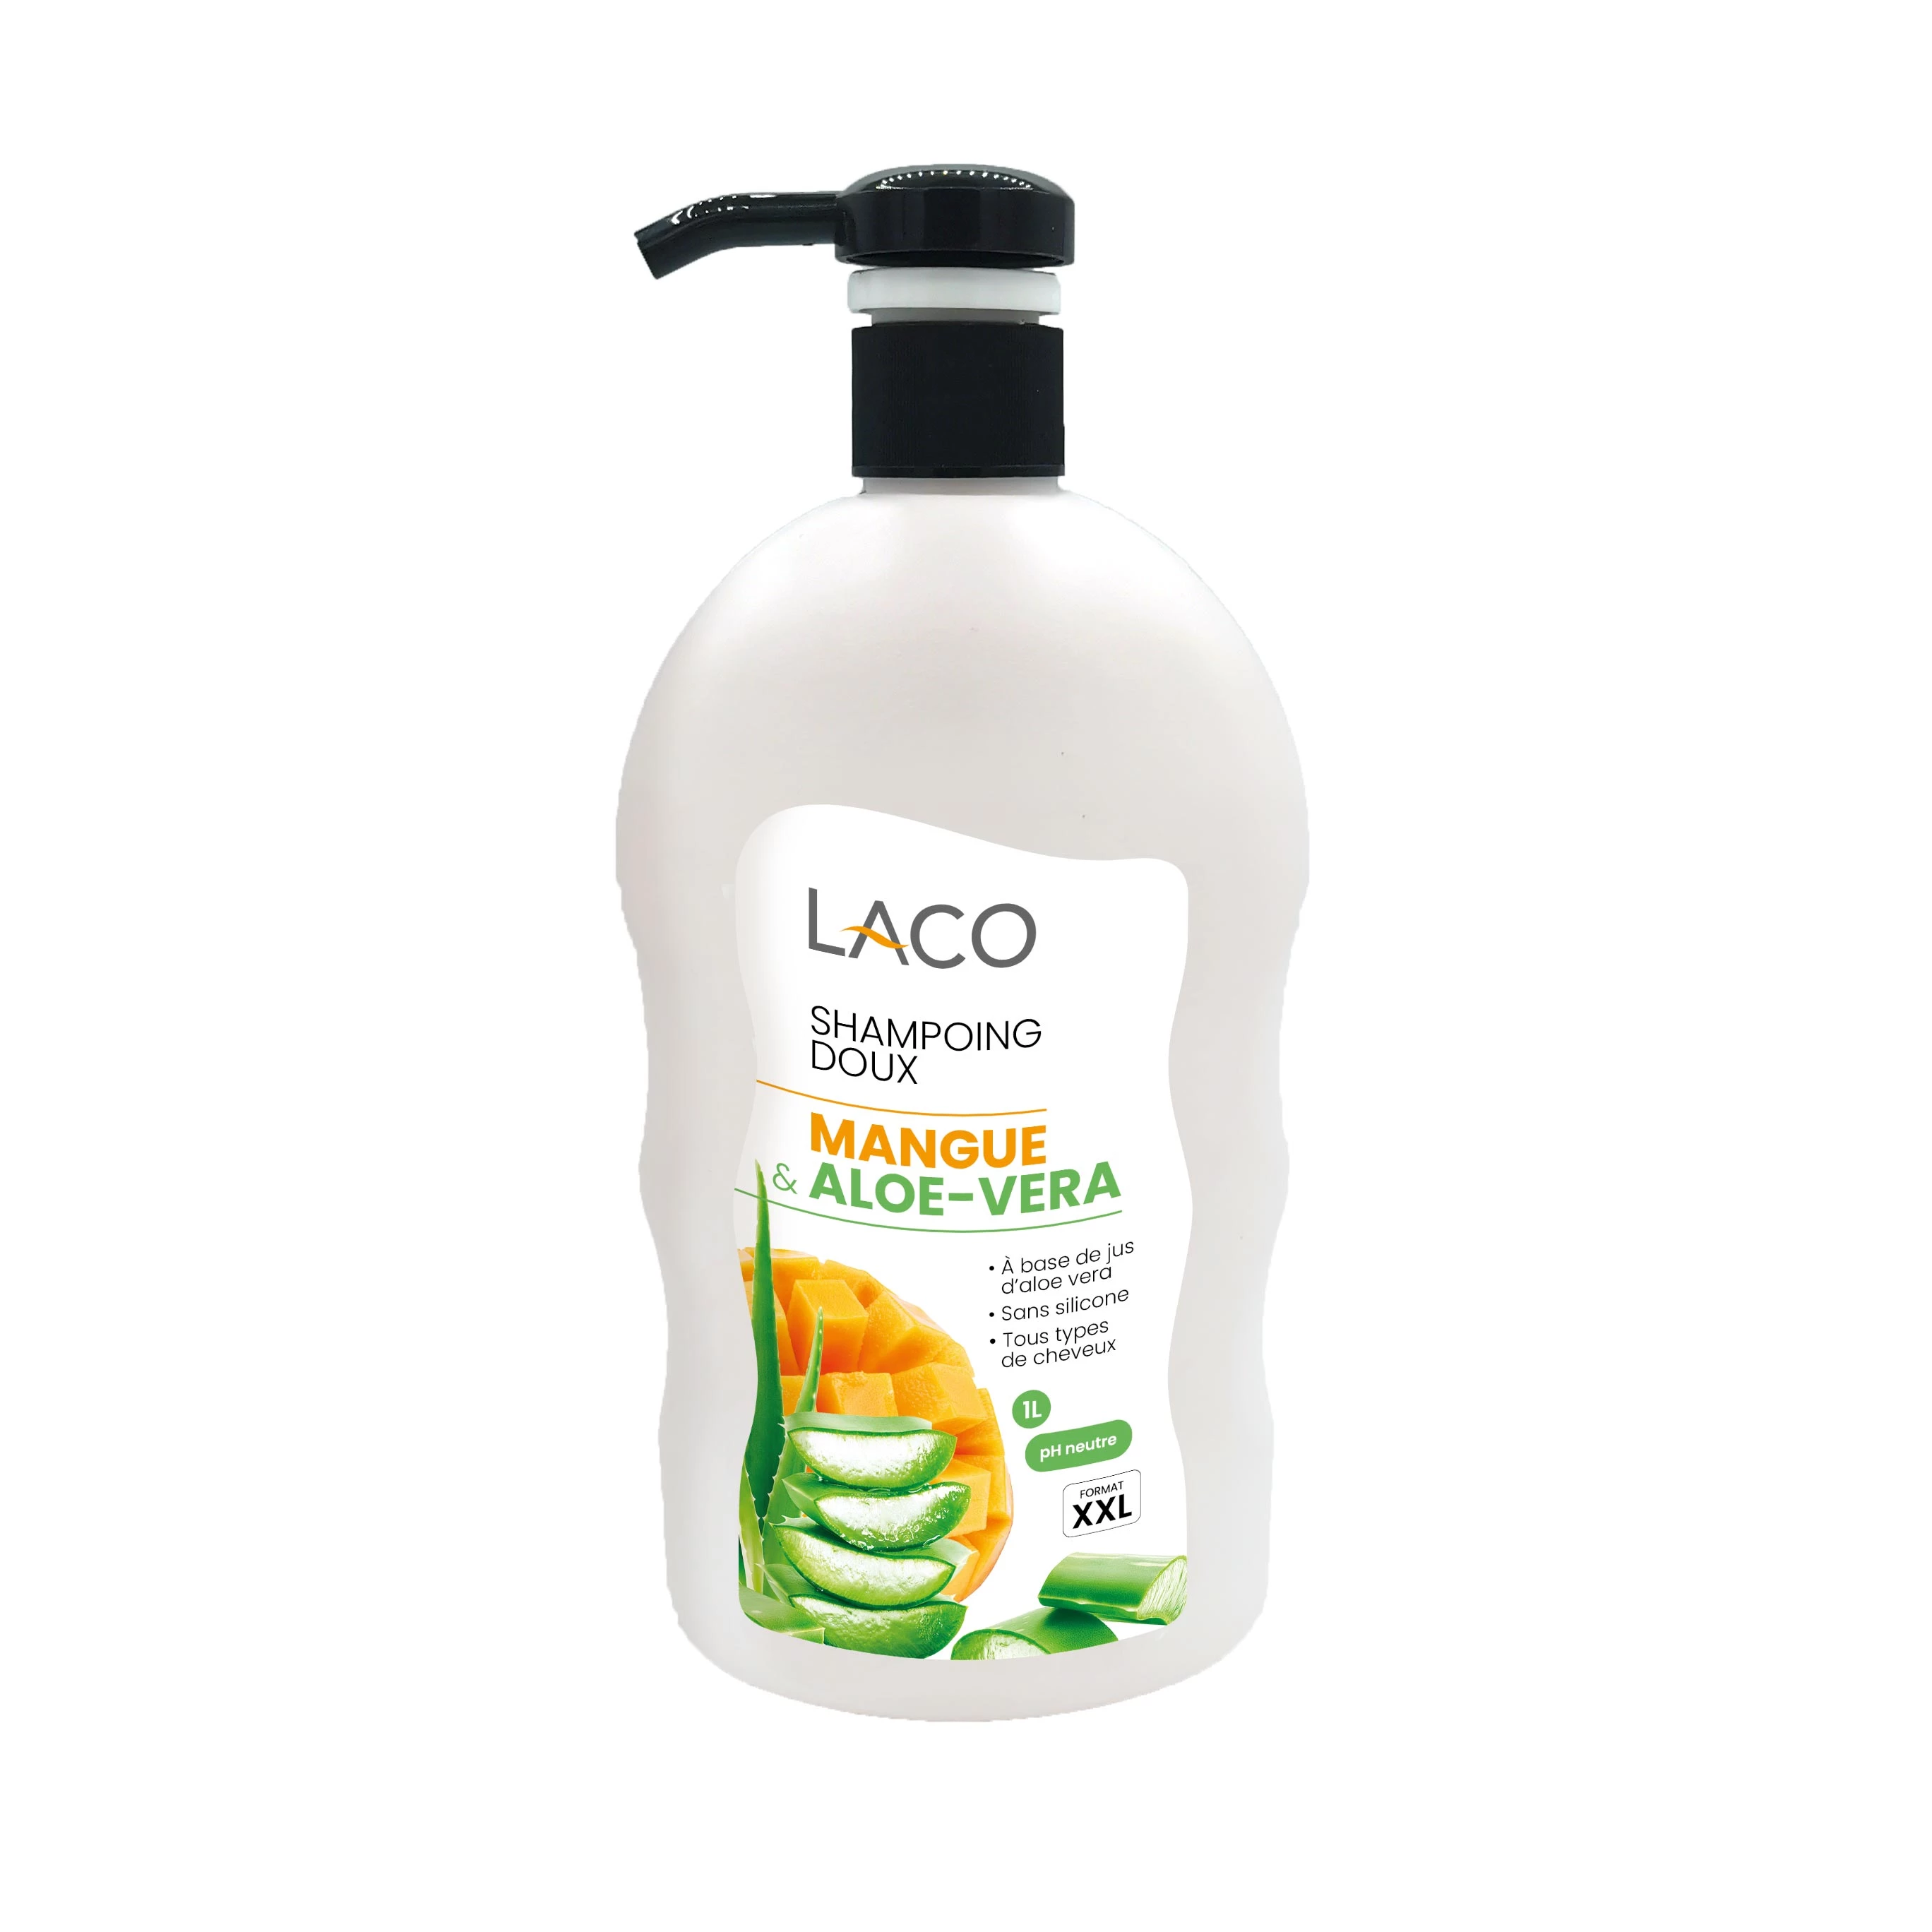 Shampoo Manga Aloe Vera, 1L - LACO